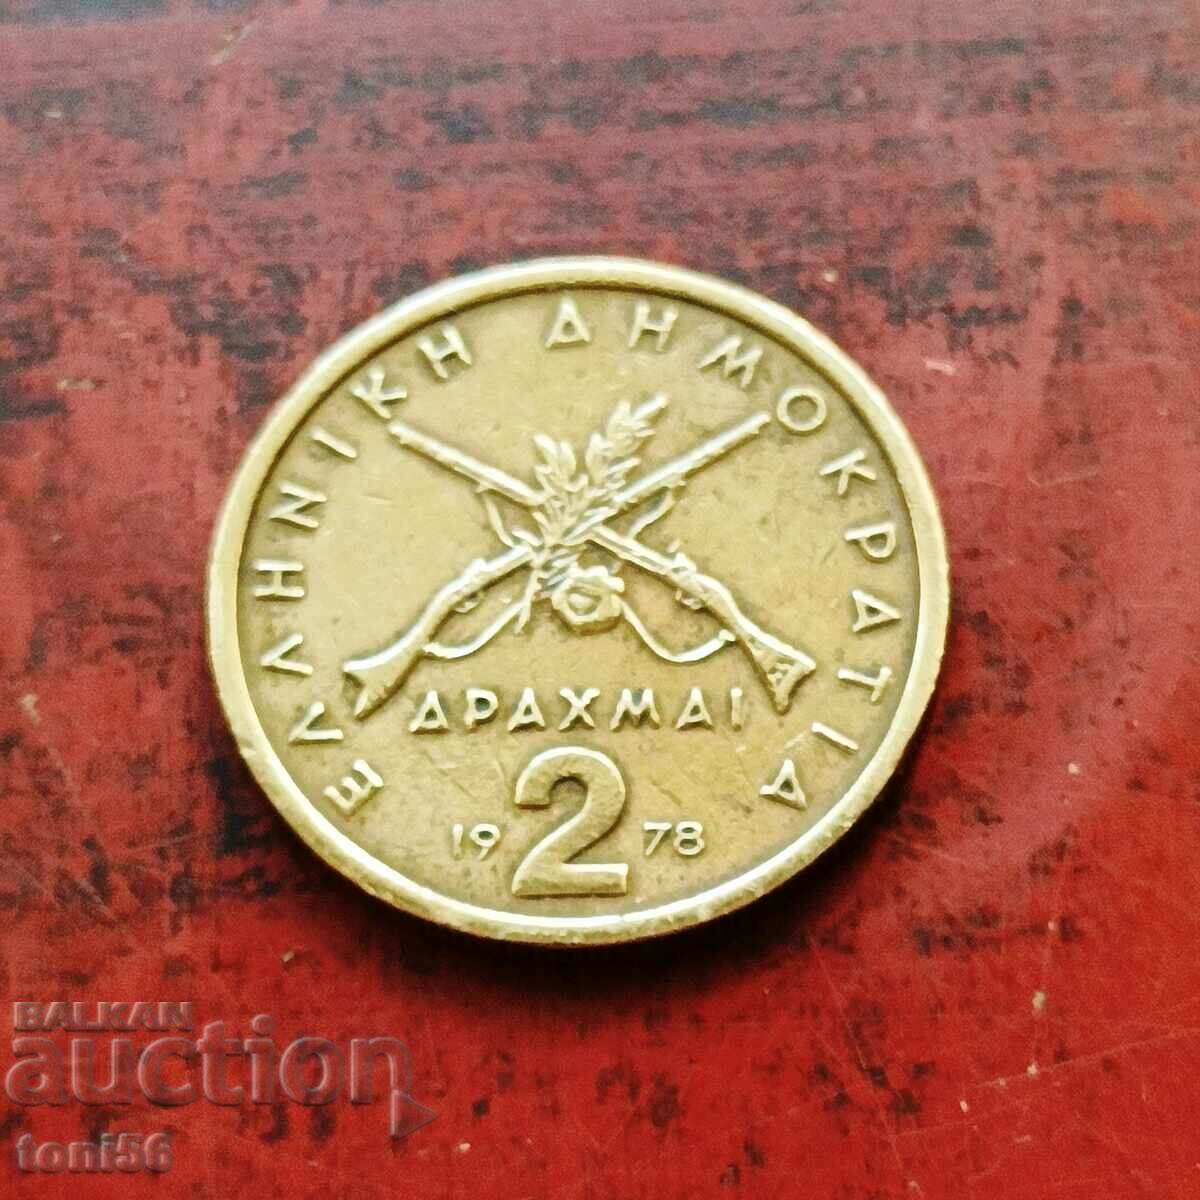 Greece 1 drachma 1978